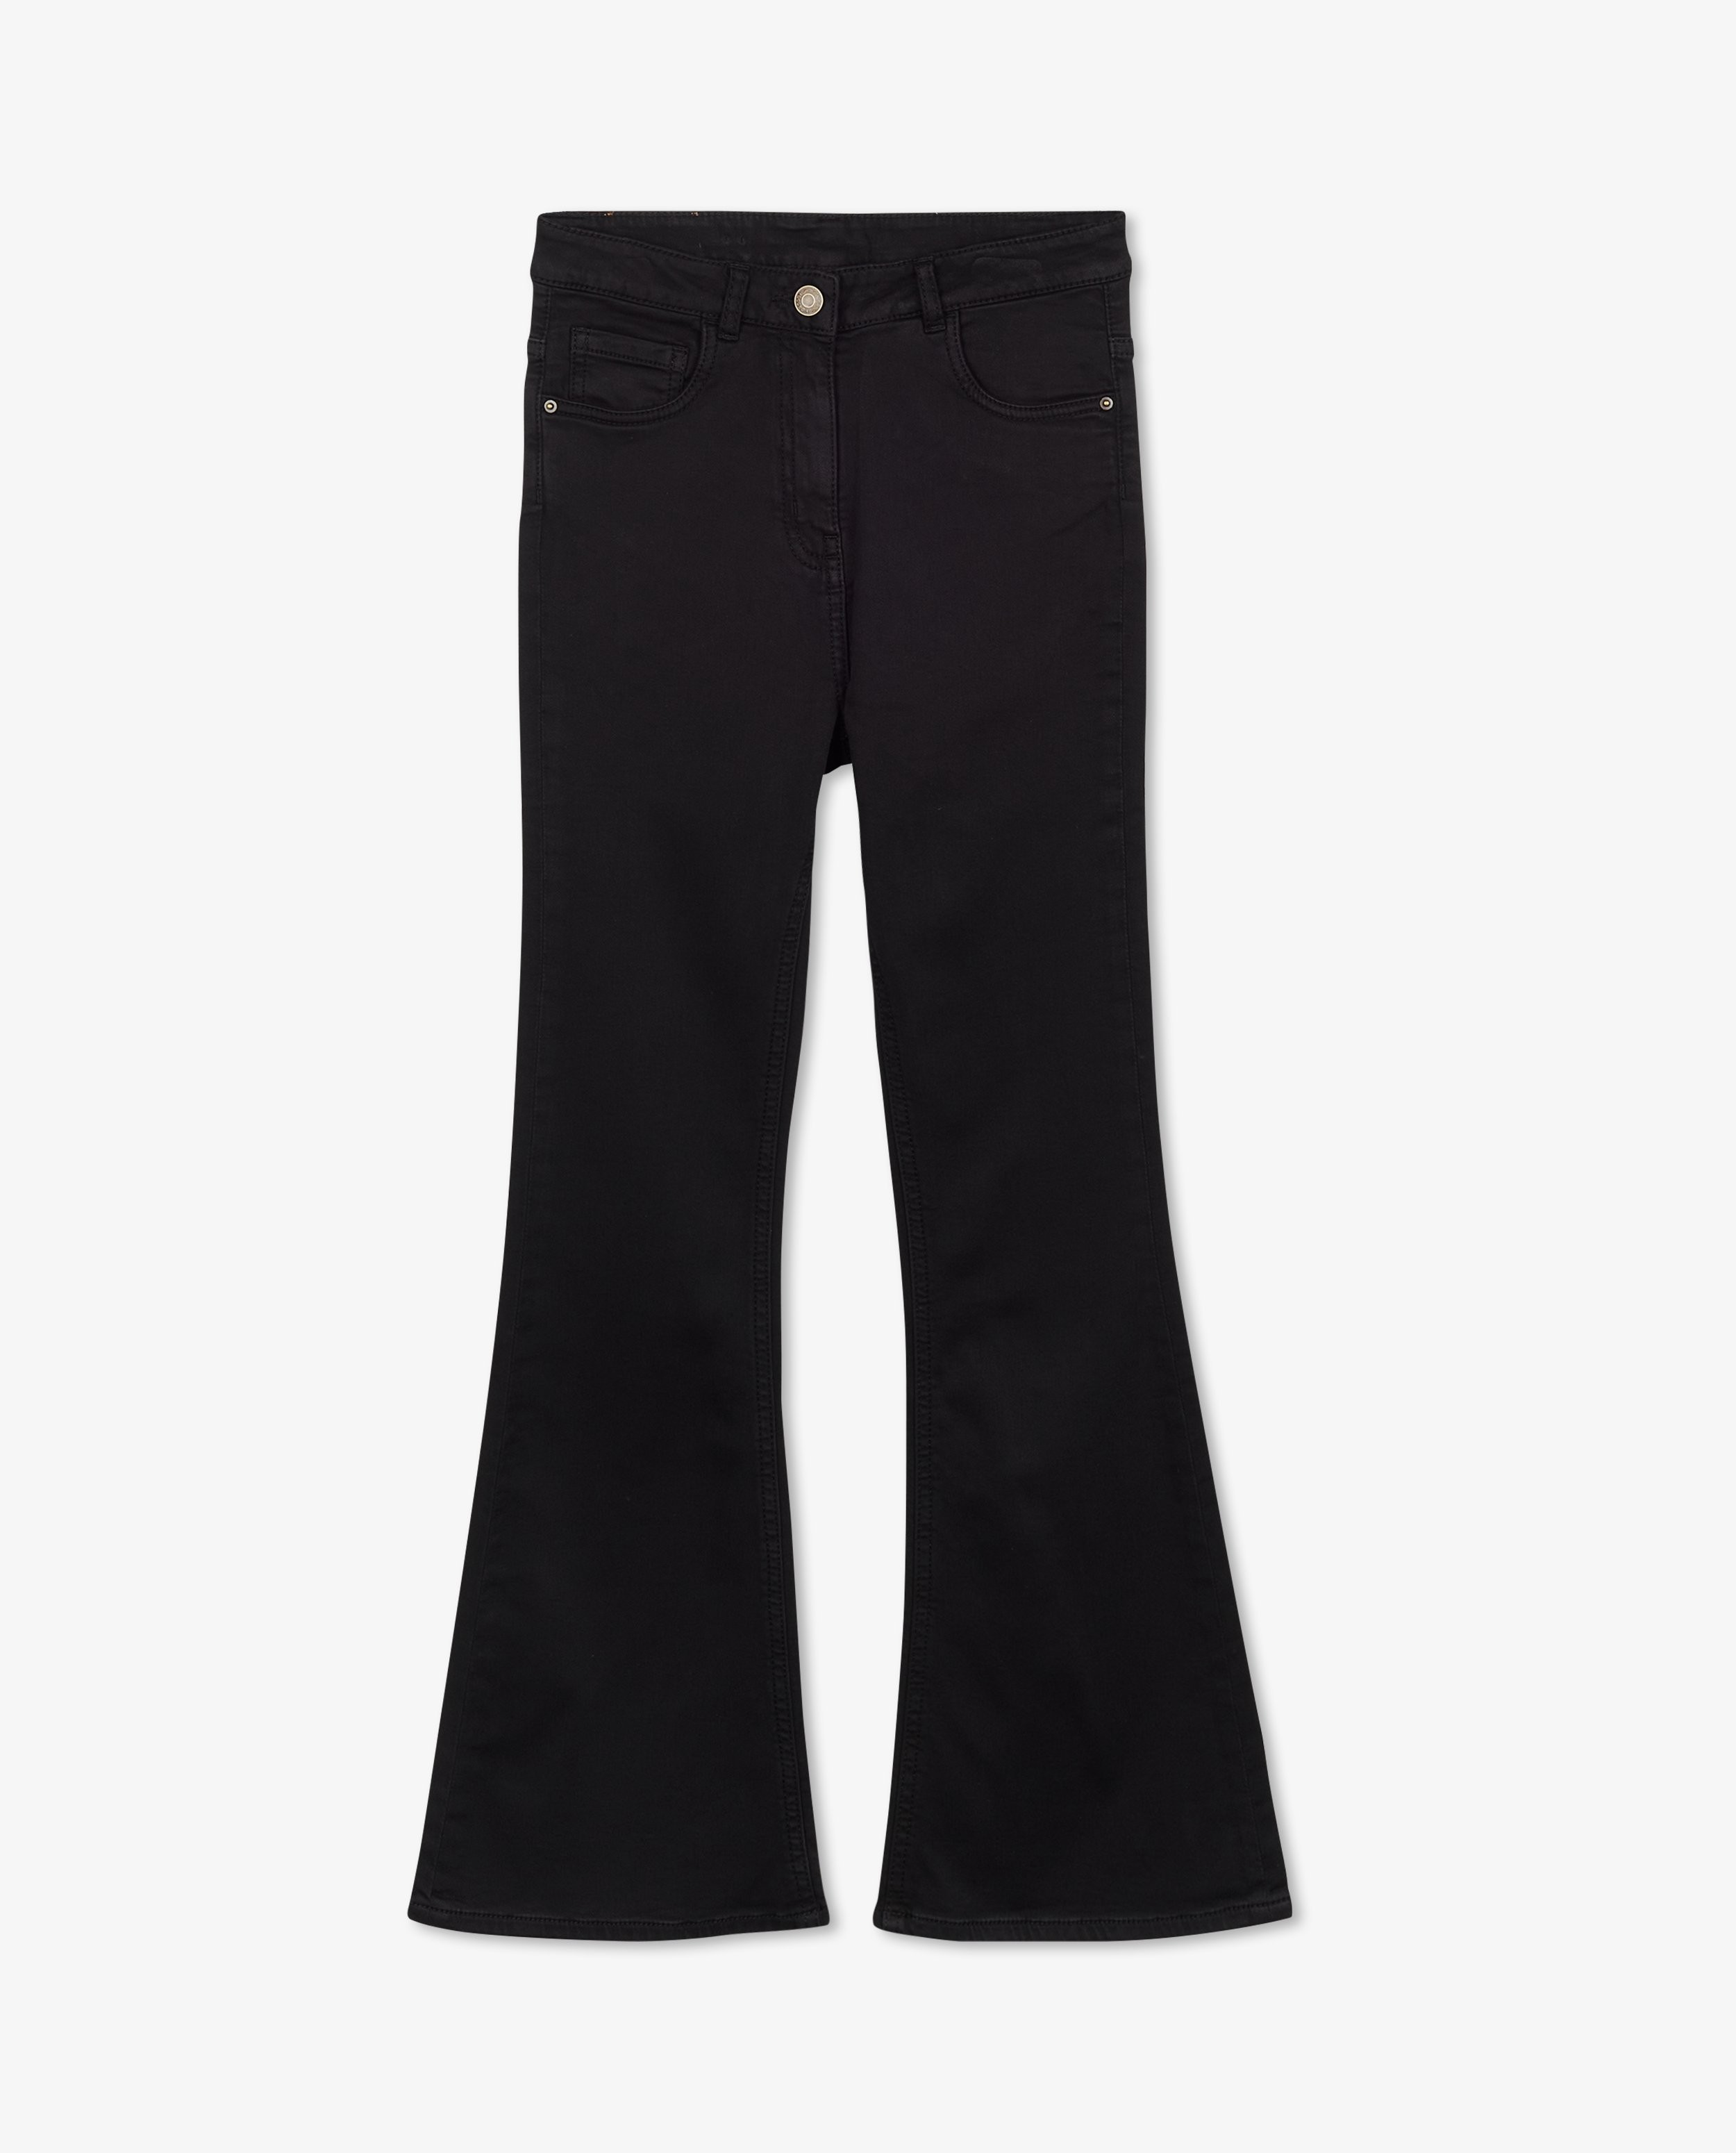 Jeans - Zwarte jeans, bootcut fit